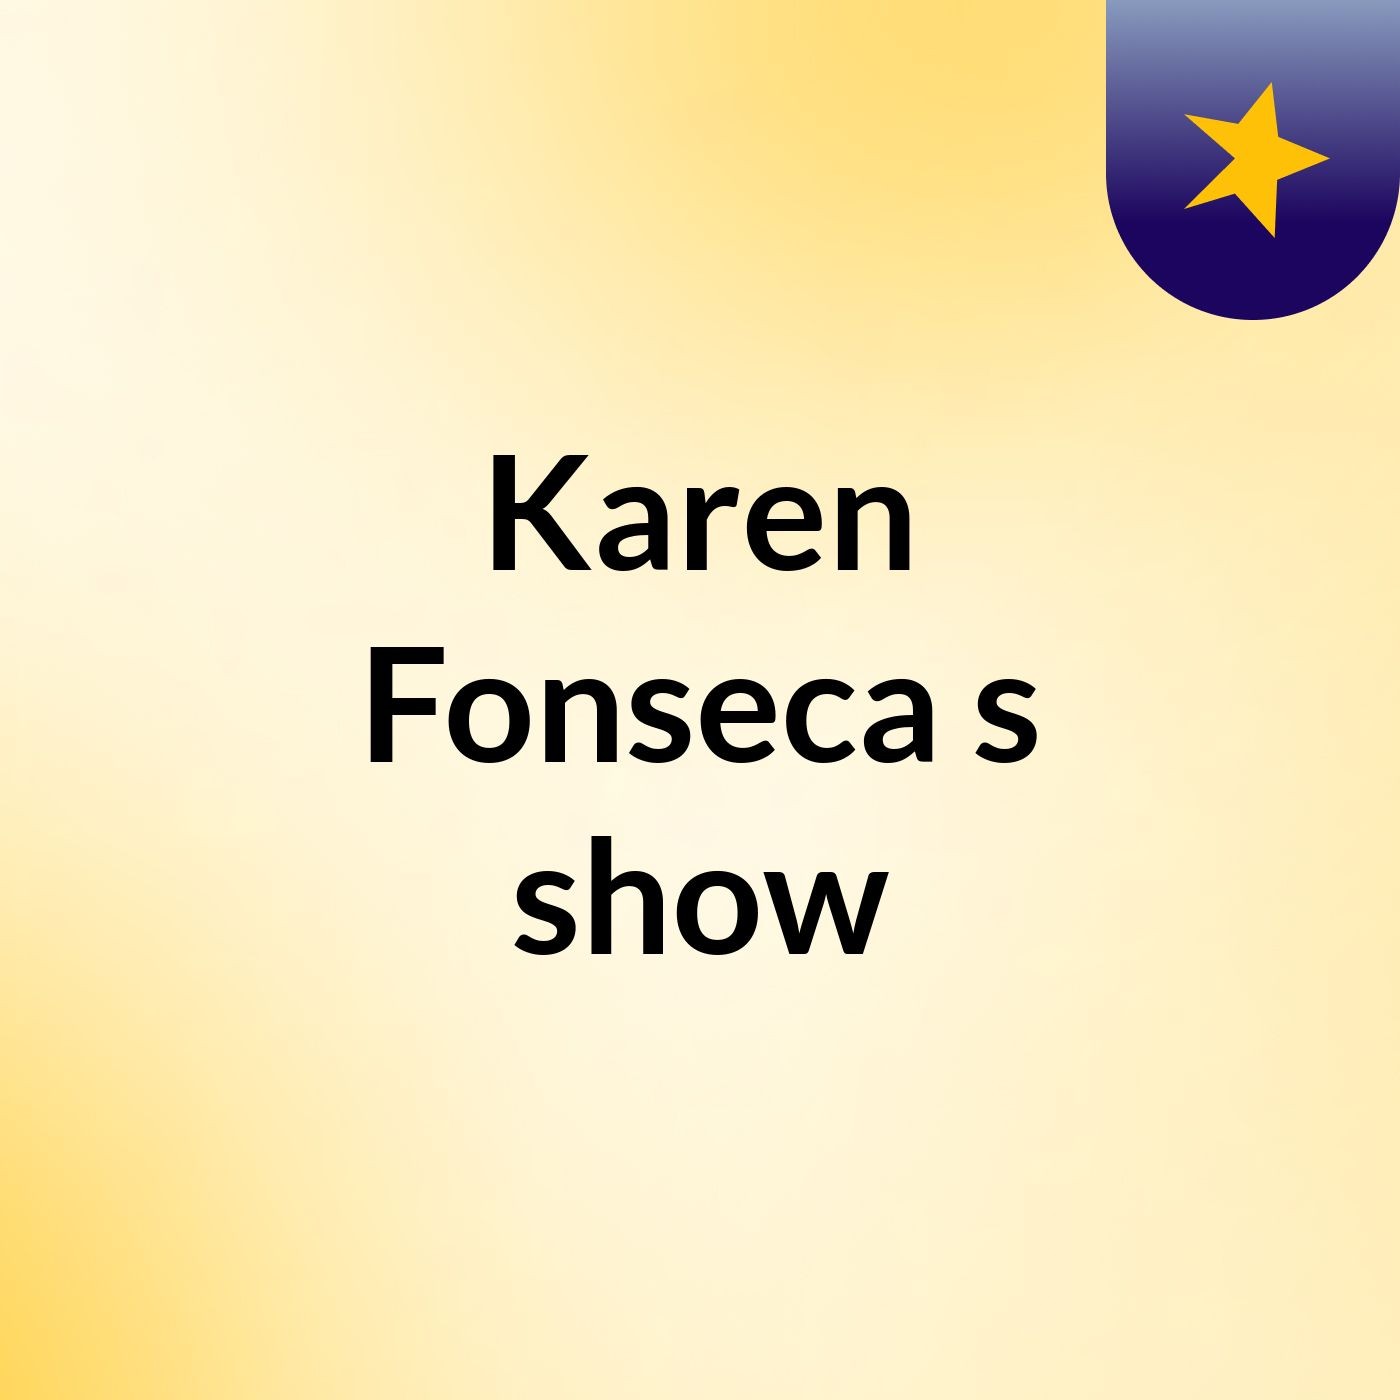 Karen Fonseca's show